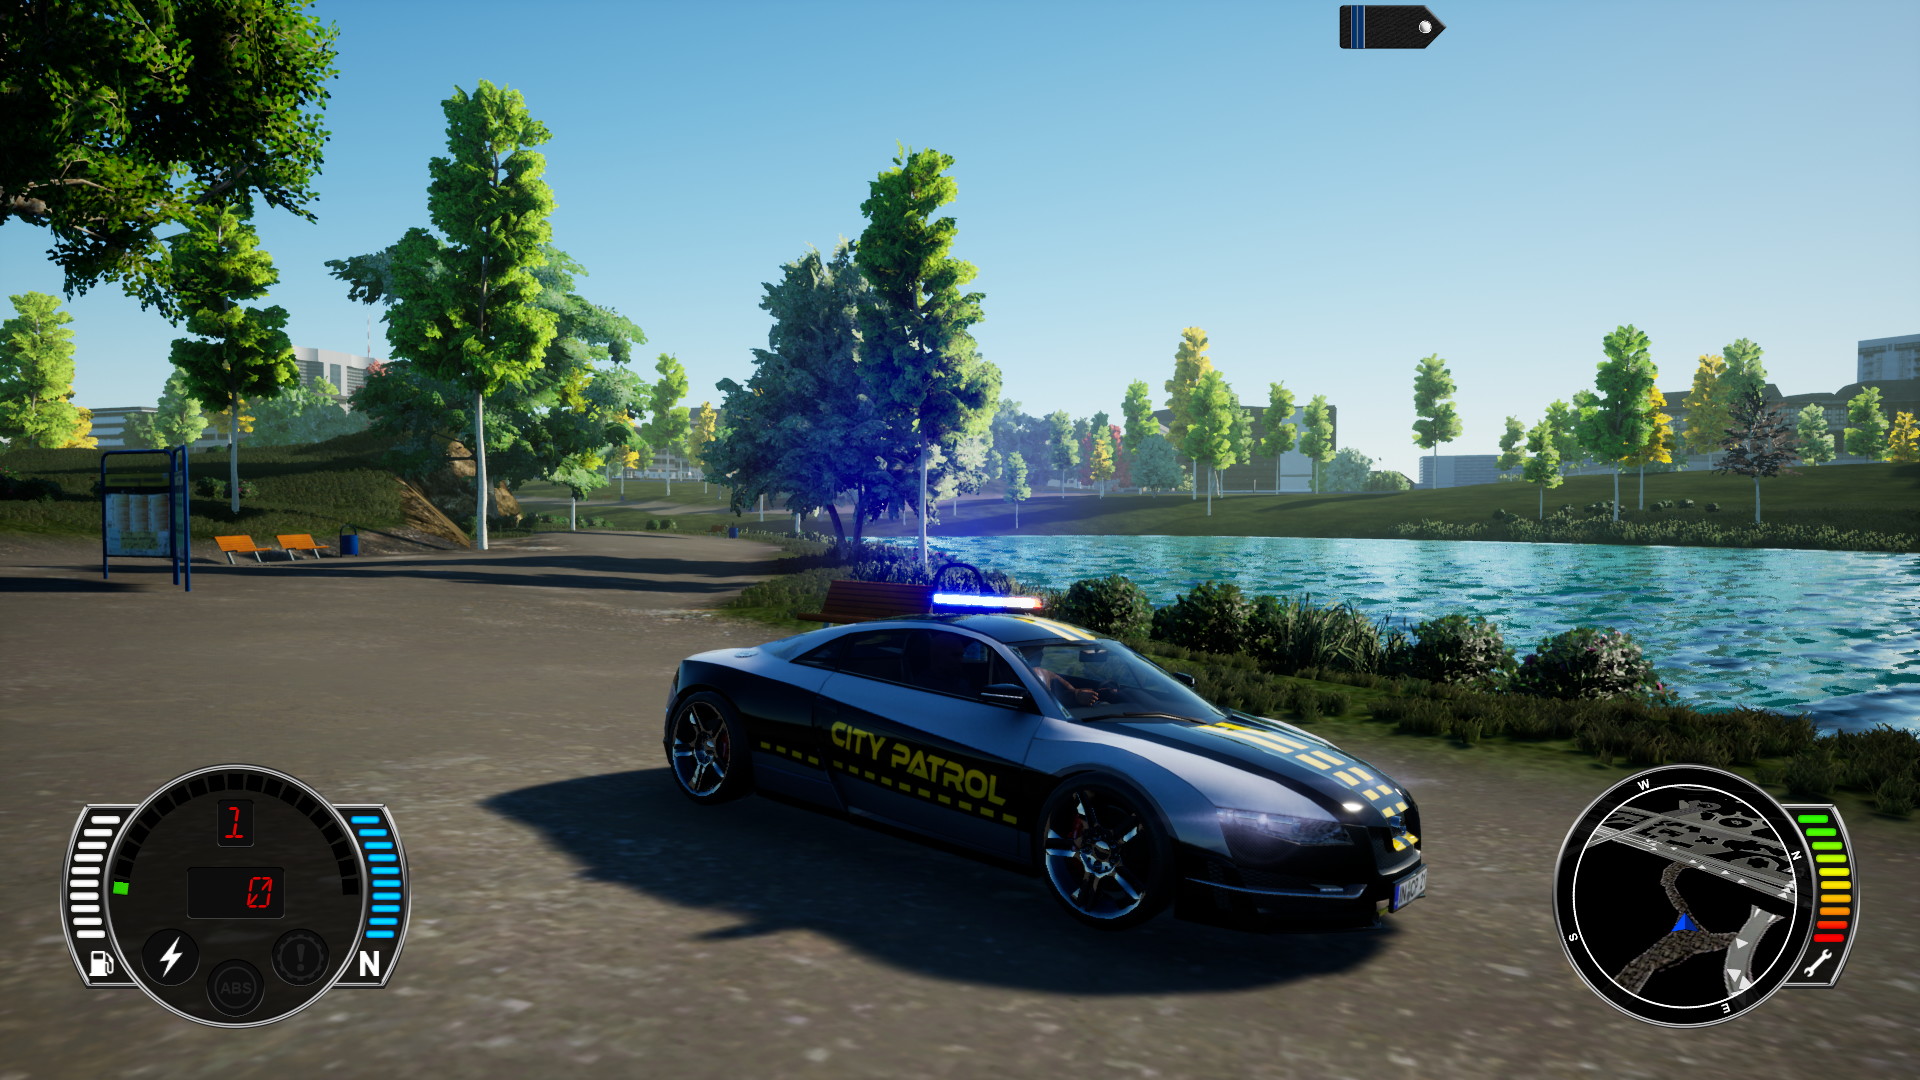 City Patrol: Police - screenshot 21